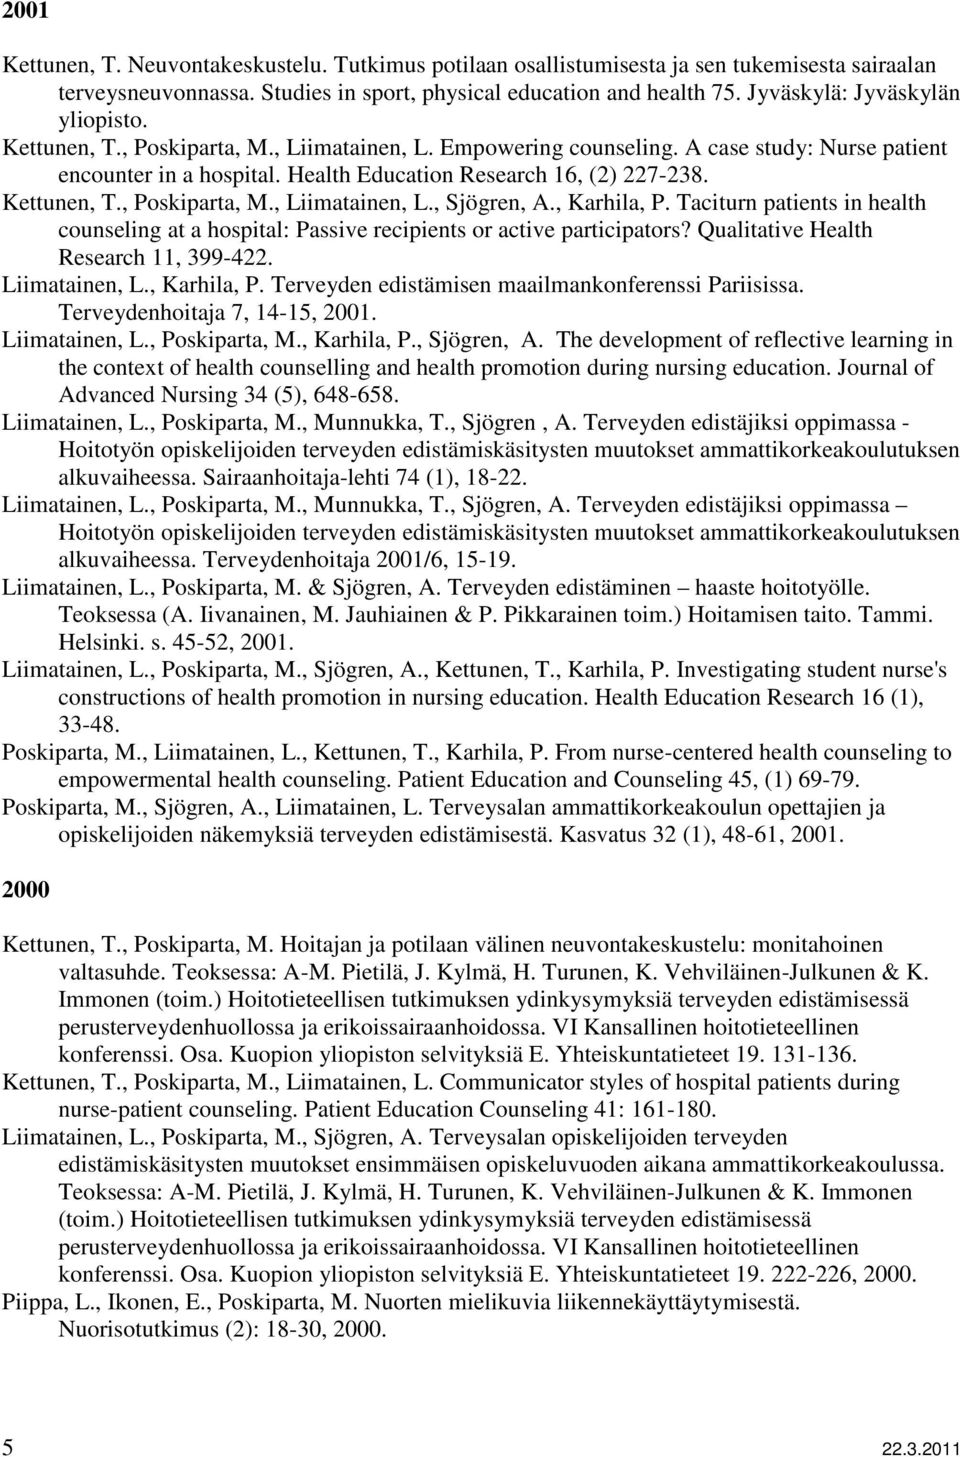 Kettunen, T., Poskiparta, M., Liimatainen, L., Sjögren, A., Karhila, P. Taciturn patients in health counseling at a hospital: Passive recipients or active participators?